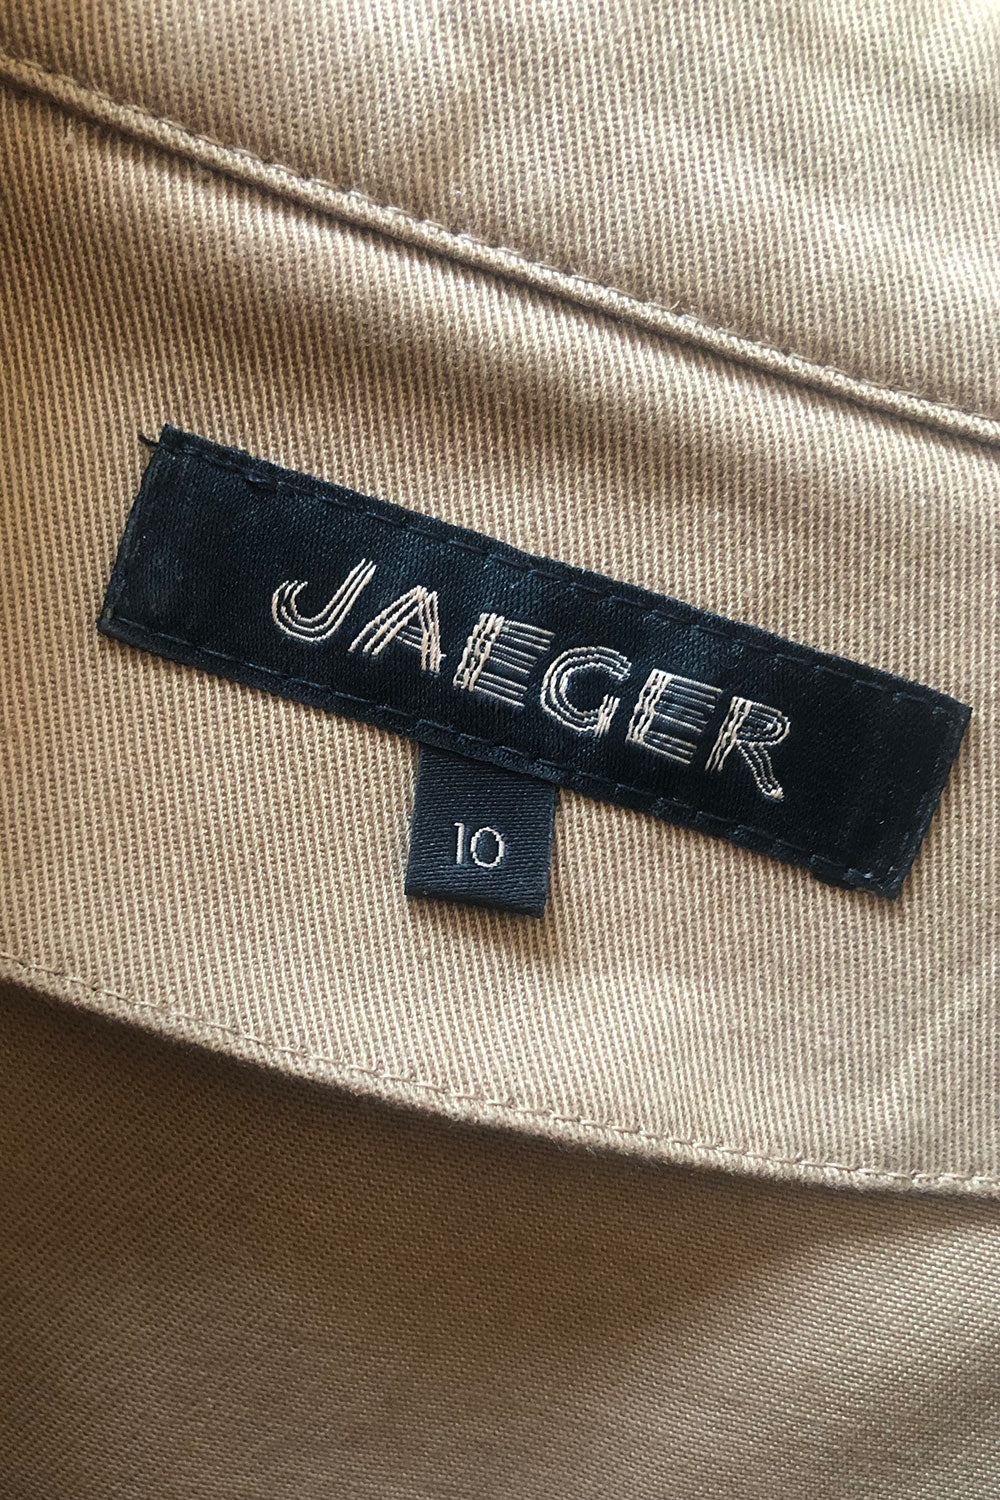 Jaeger Vintage Oversized Minimal Dress Size 10